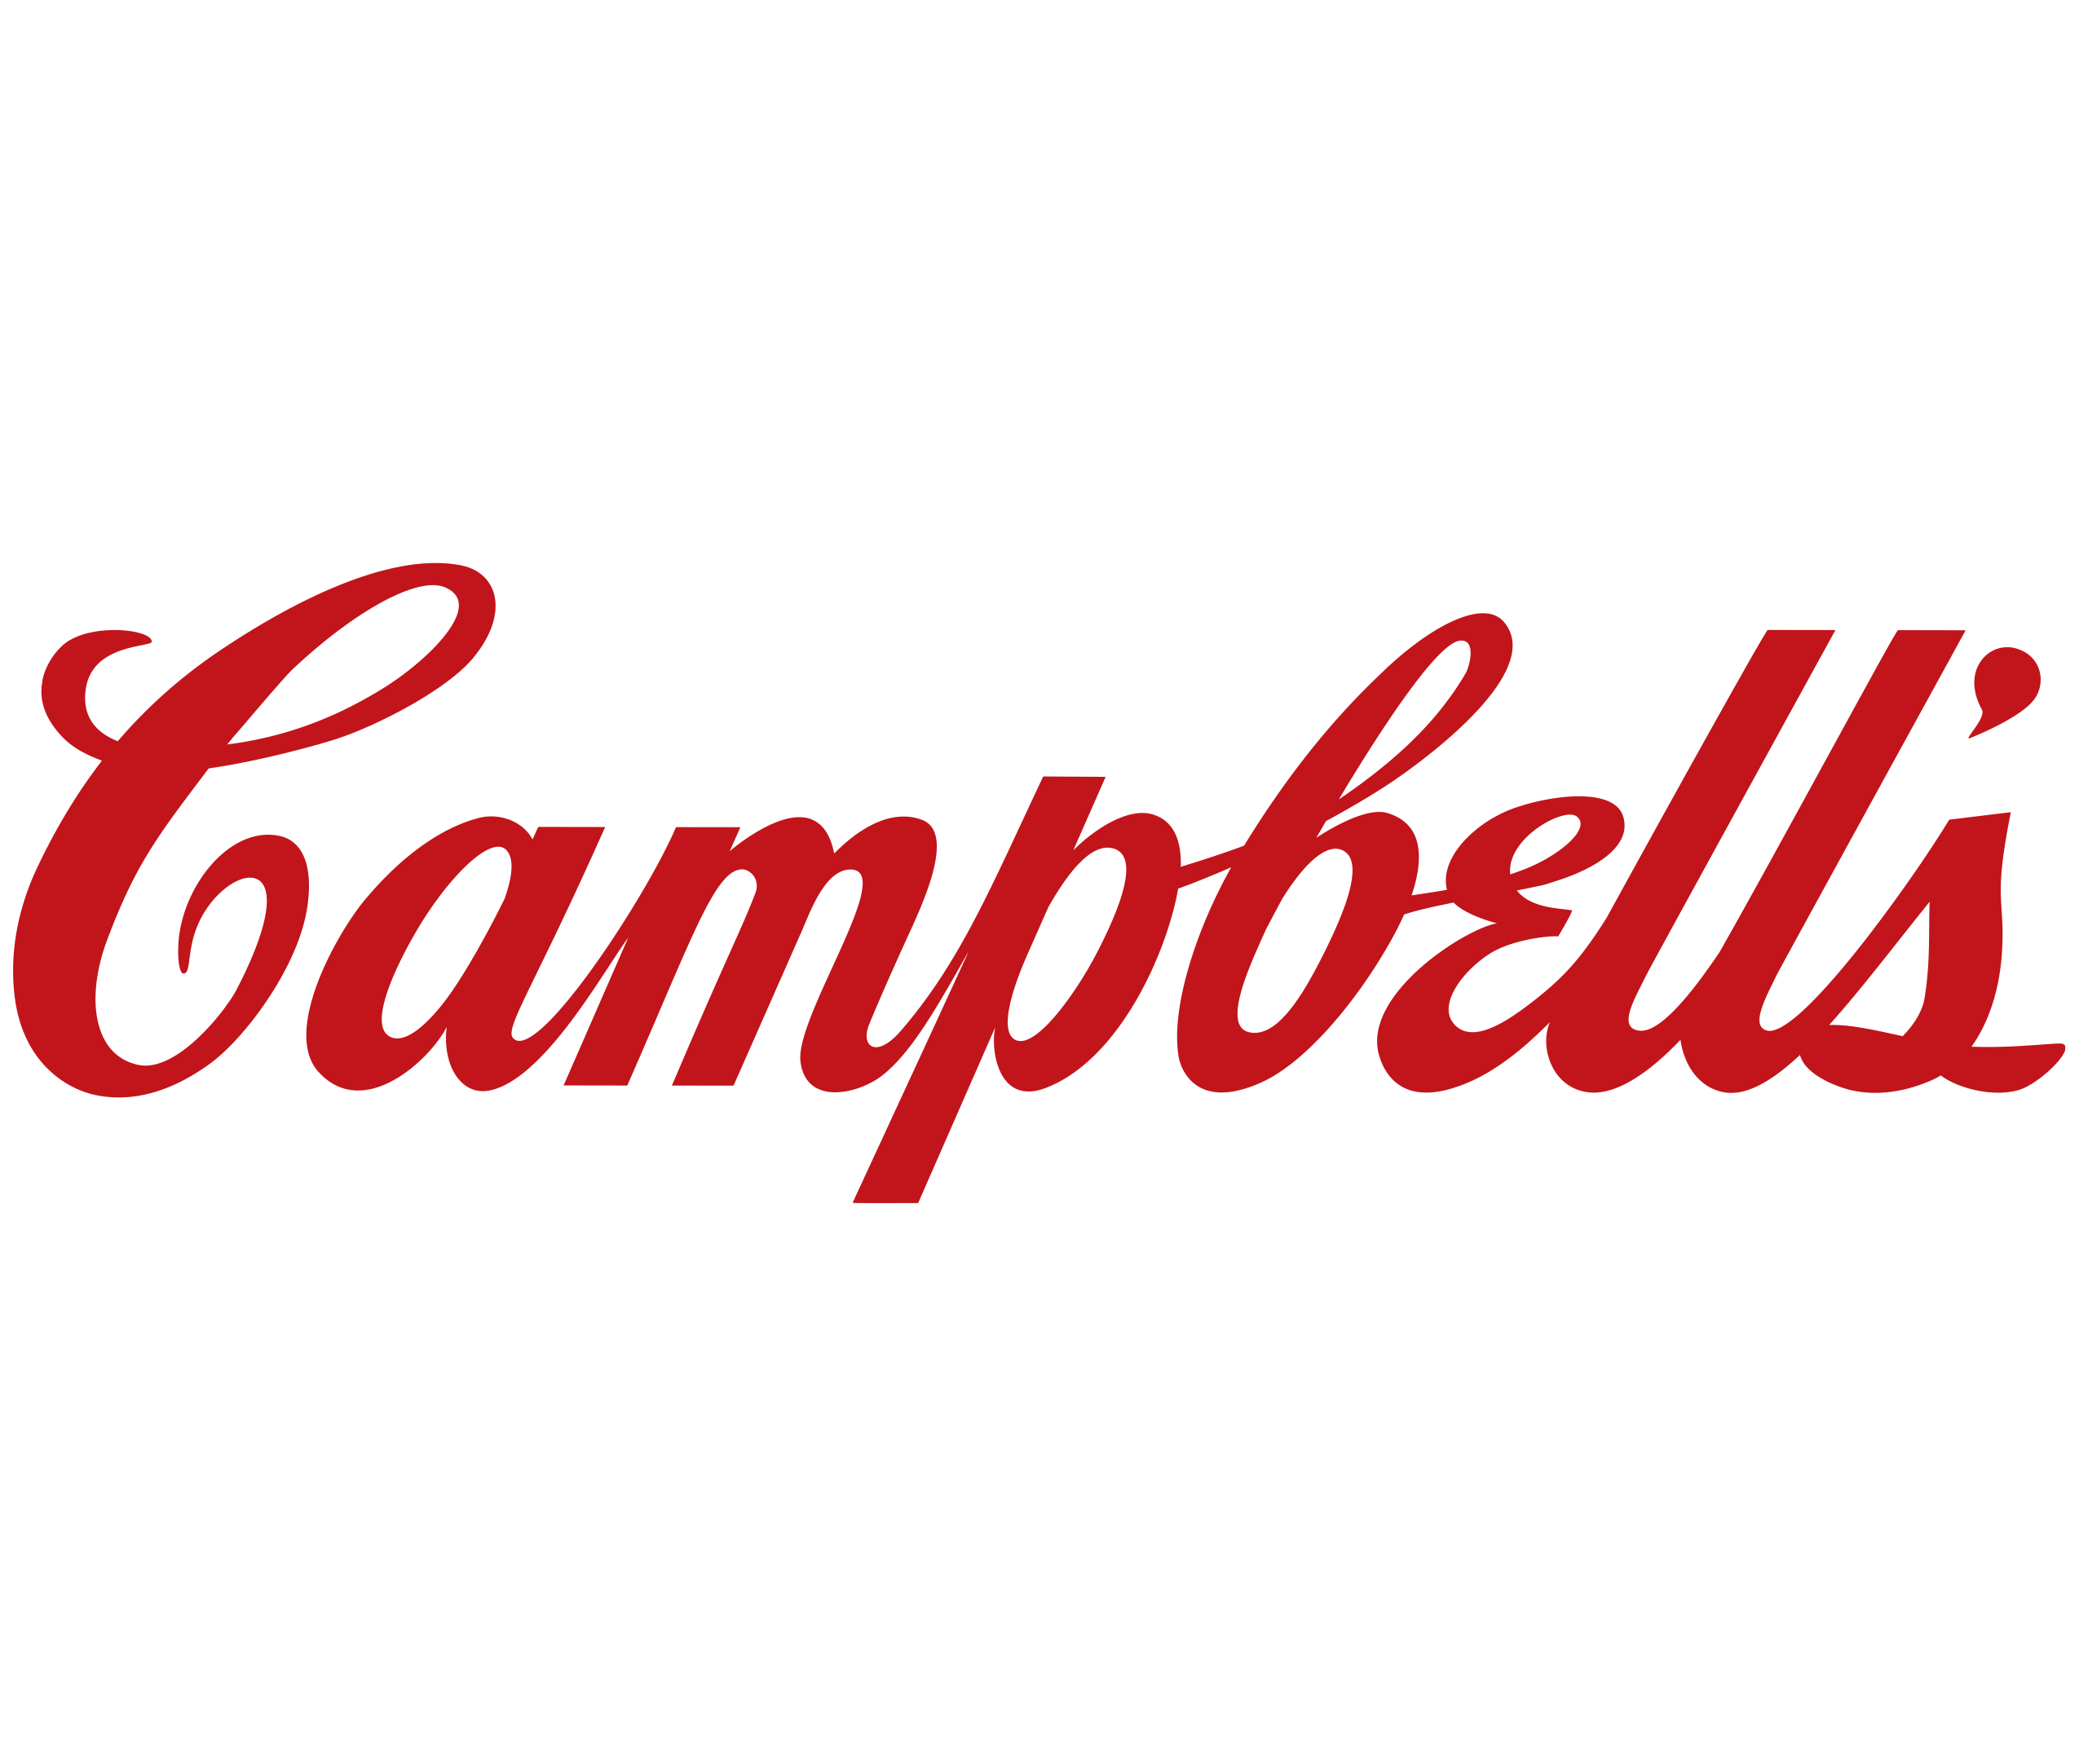 Campbell’s Logo Transparent Background